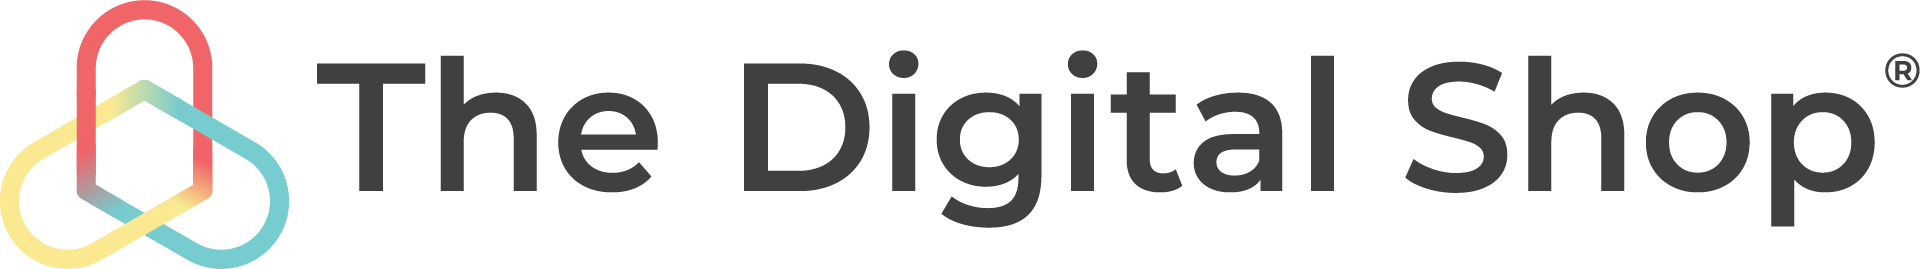 The Digital Shop Logo.